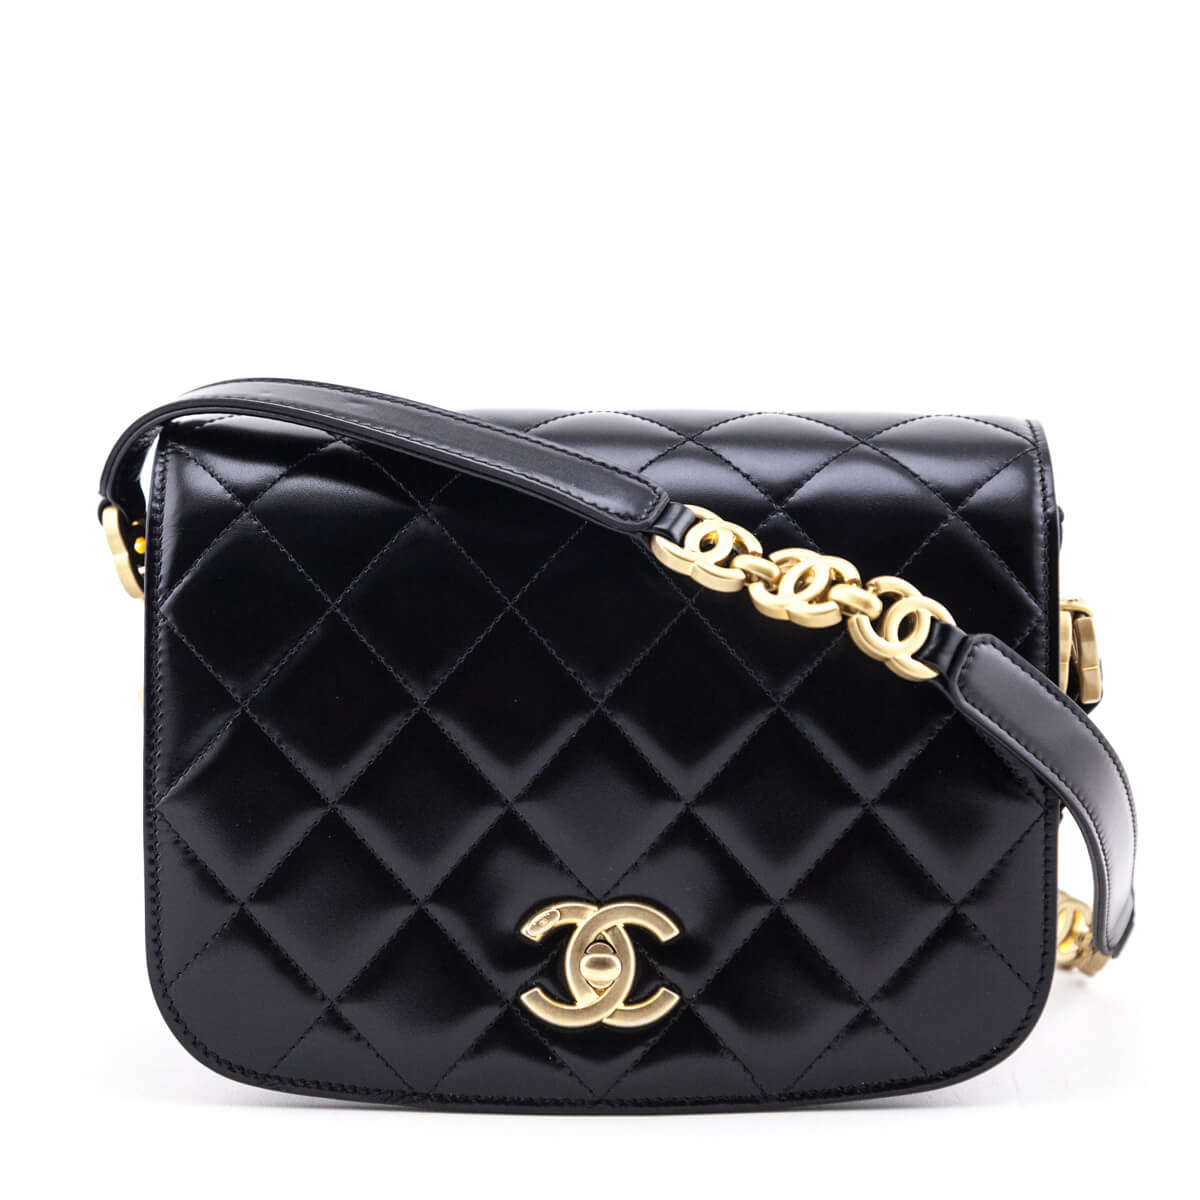 Chanel Chanel Sports Line White  Black Nylon Messenger Bag